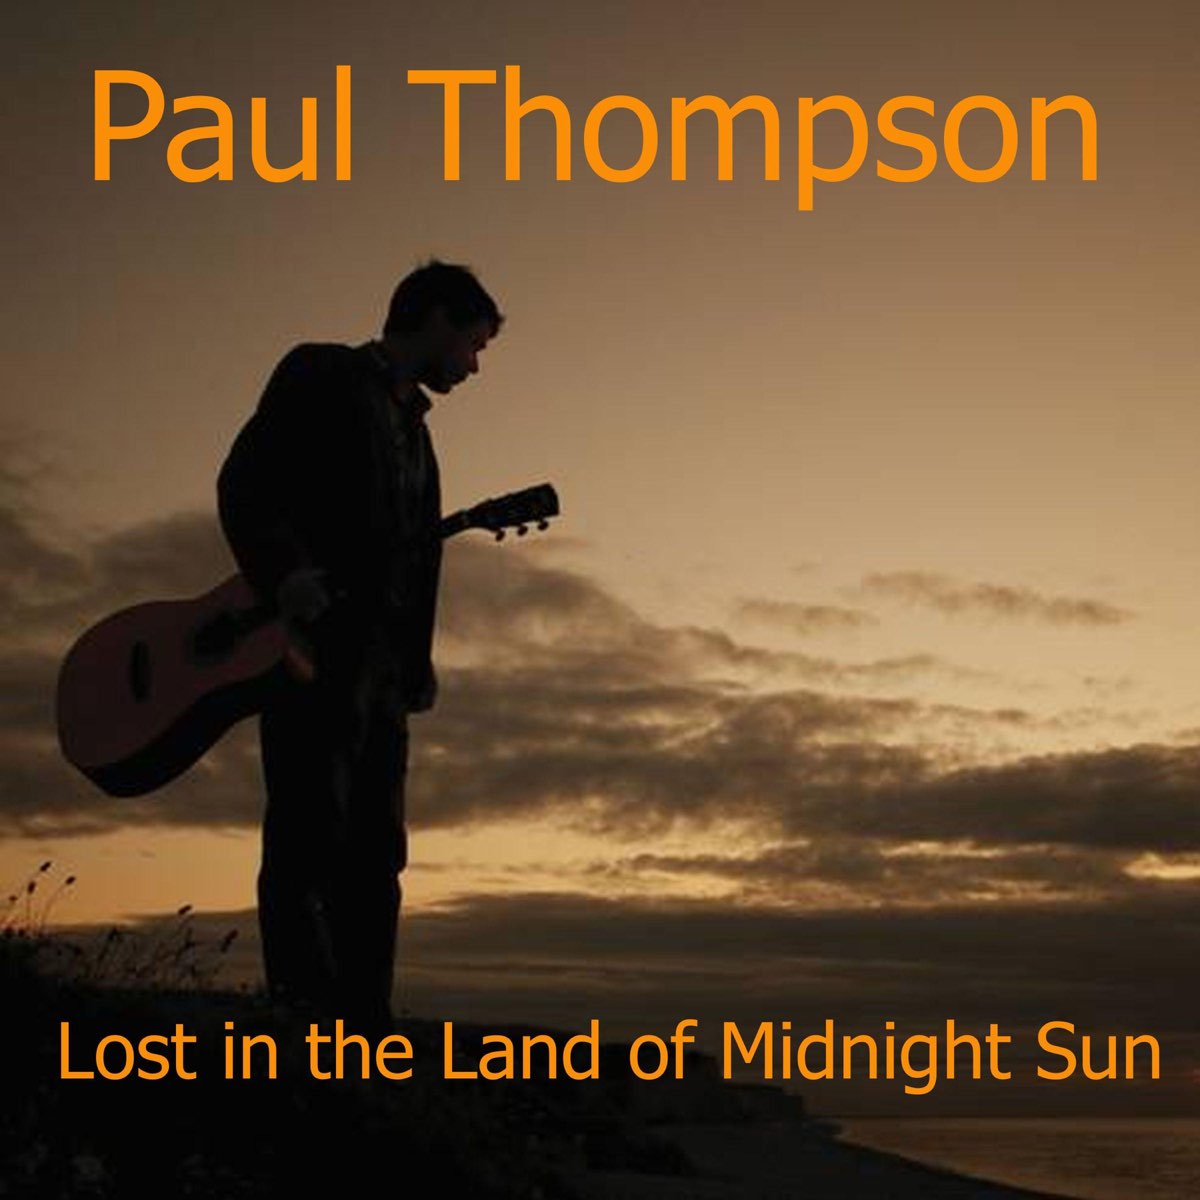 Paul changes. Paul Thompson (musician). Пол Томпсон. The Land of the Midnight Sun.